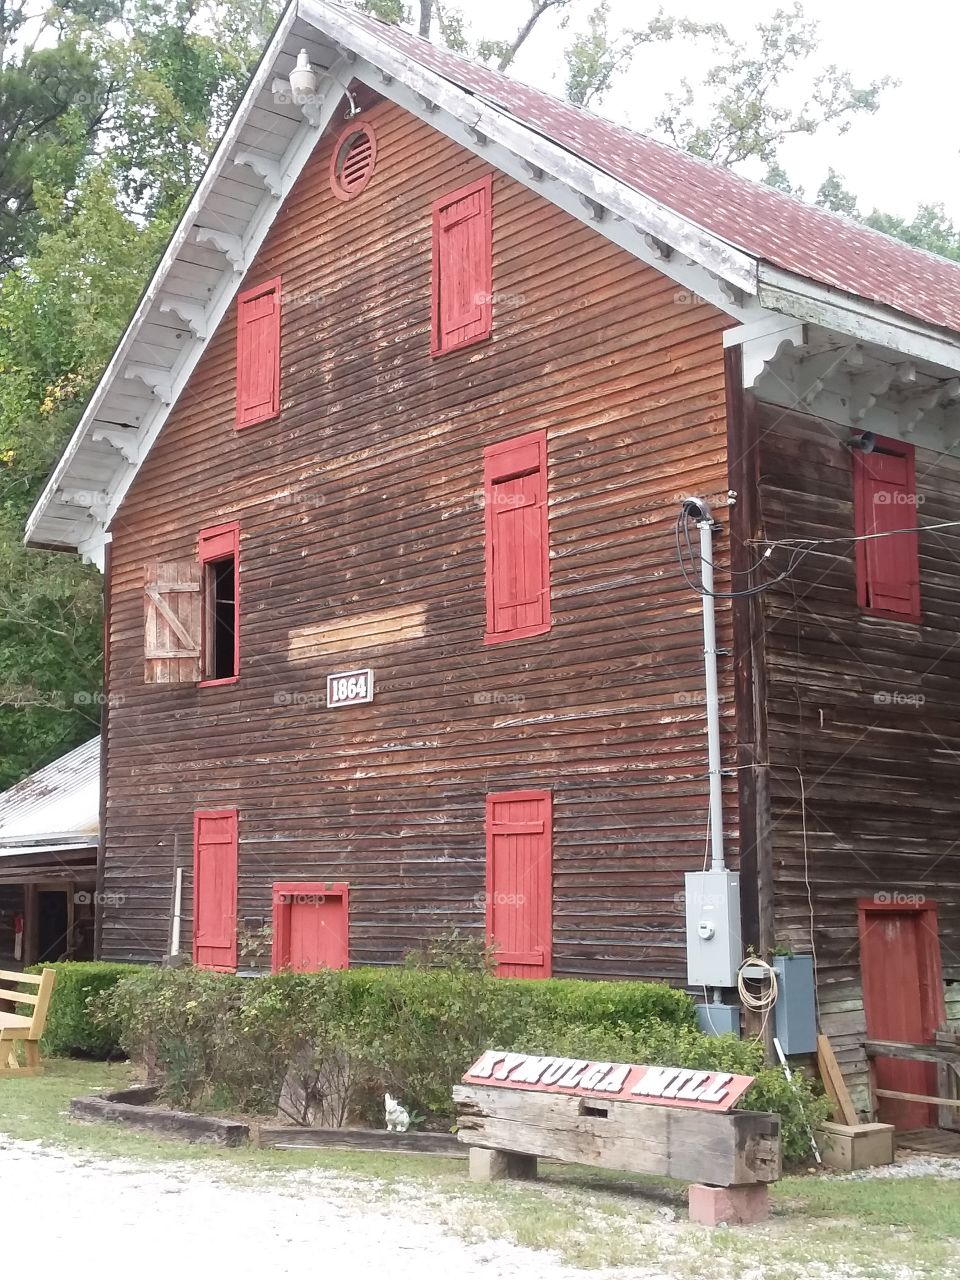 Kymulga Grist Mill 1864 Historical Building Sylacauga Alabama USA